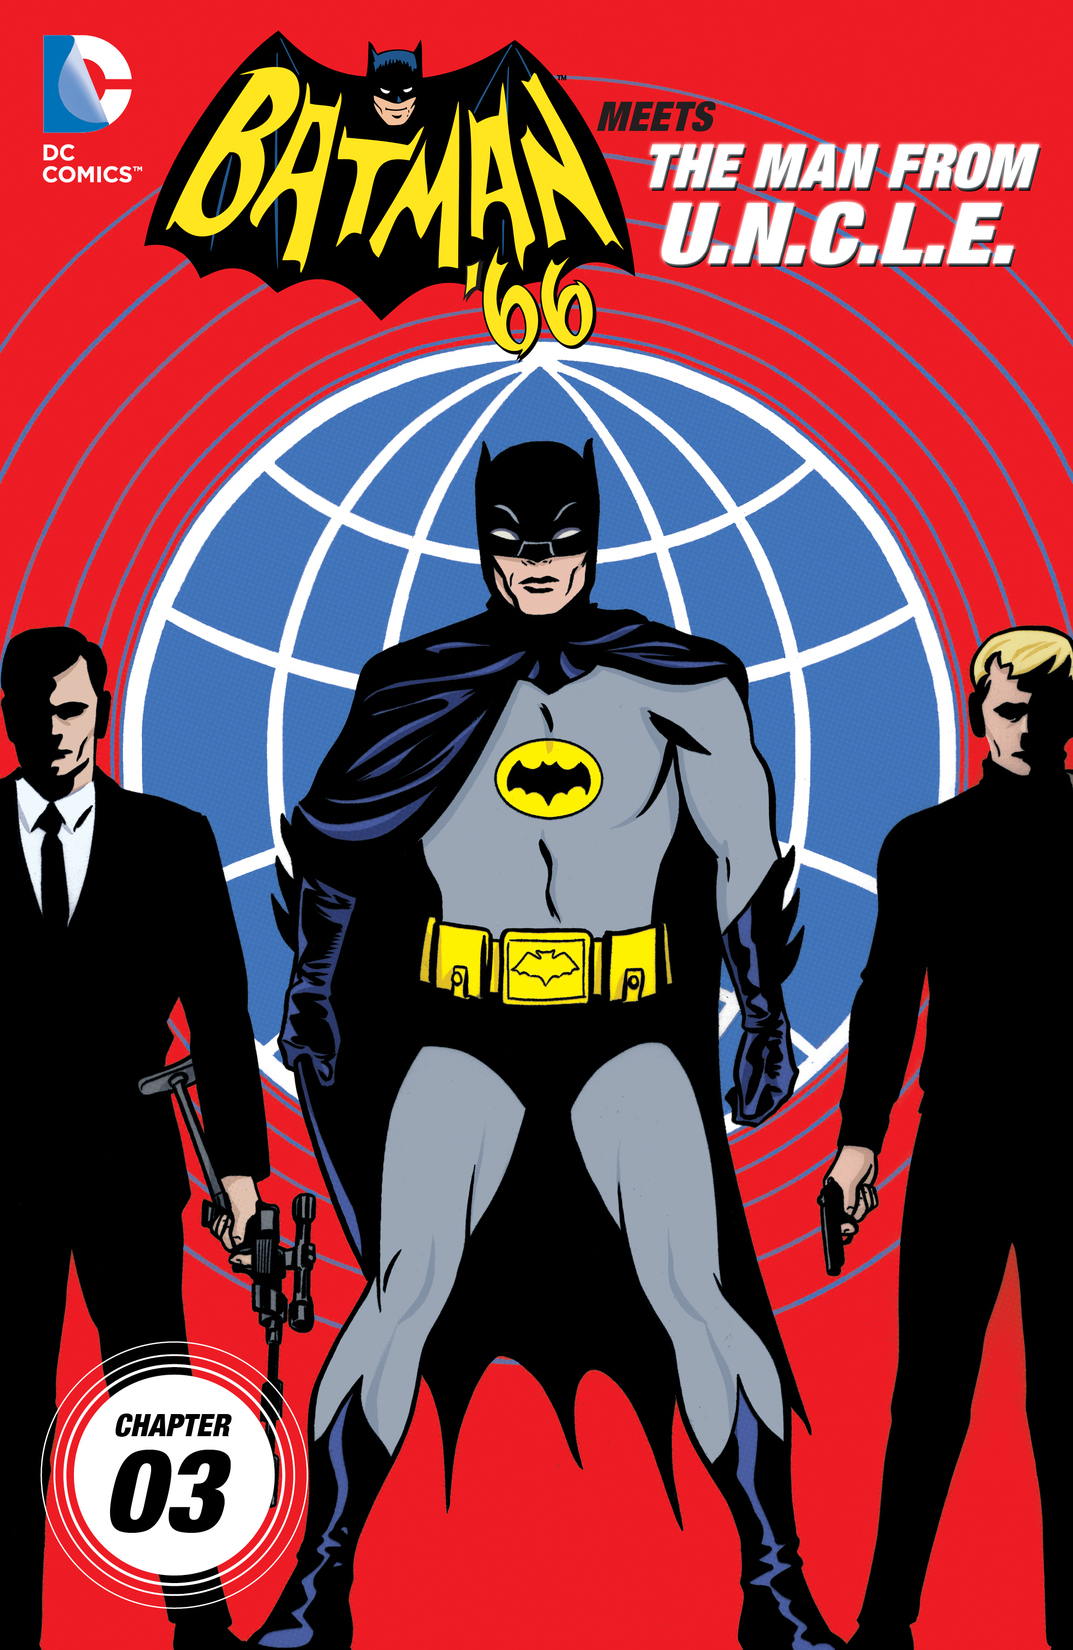 Batman '66 Meets The Man From U.N.C.L.E. #3 preview images